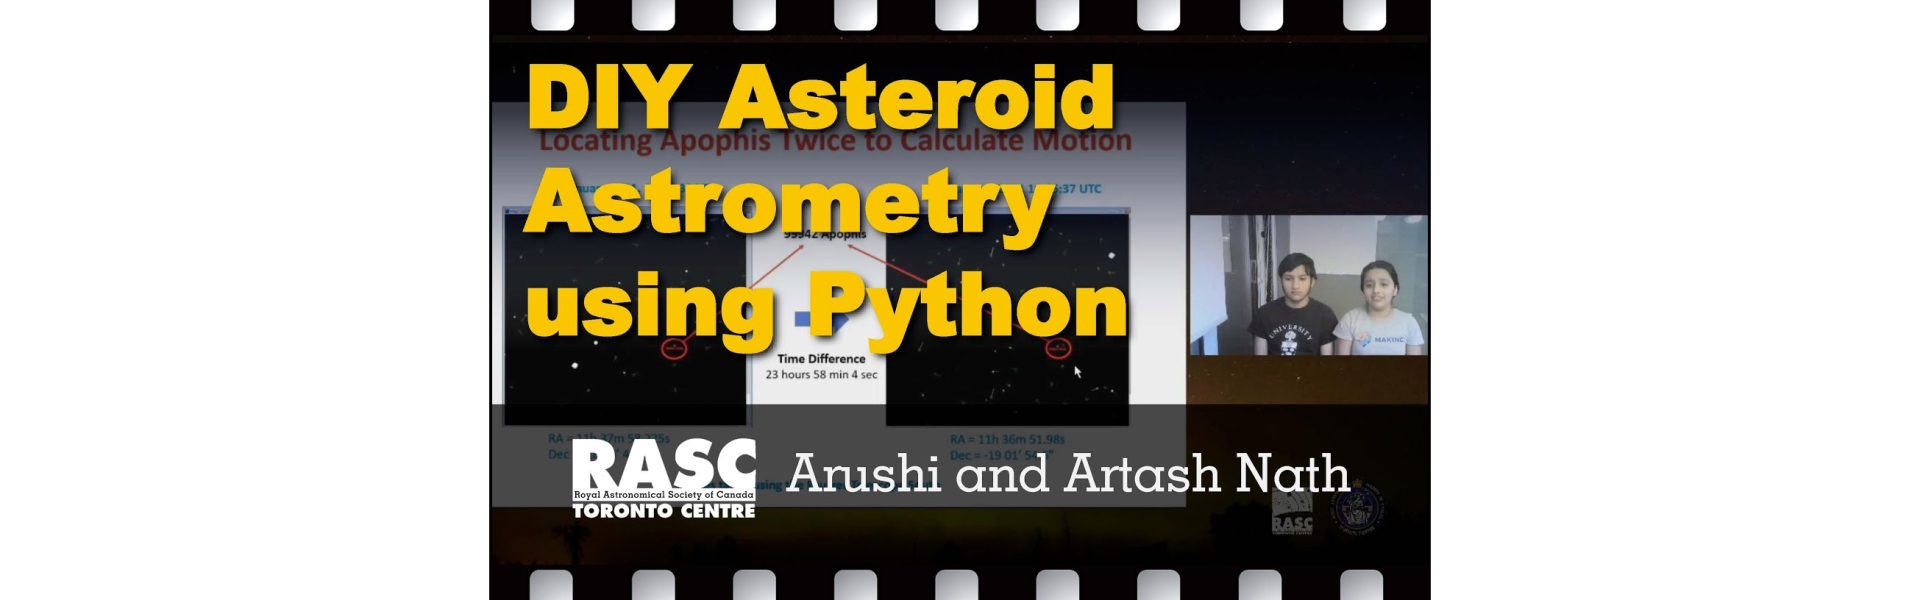 DIY Asteroid Astrometry using Python